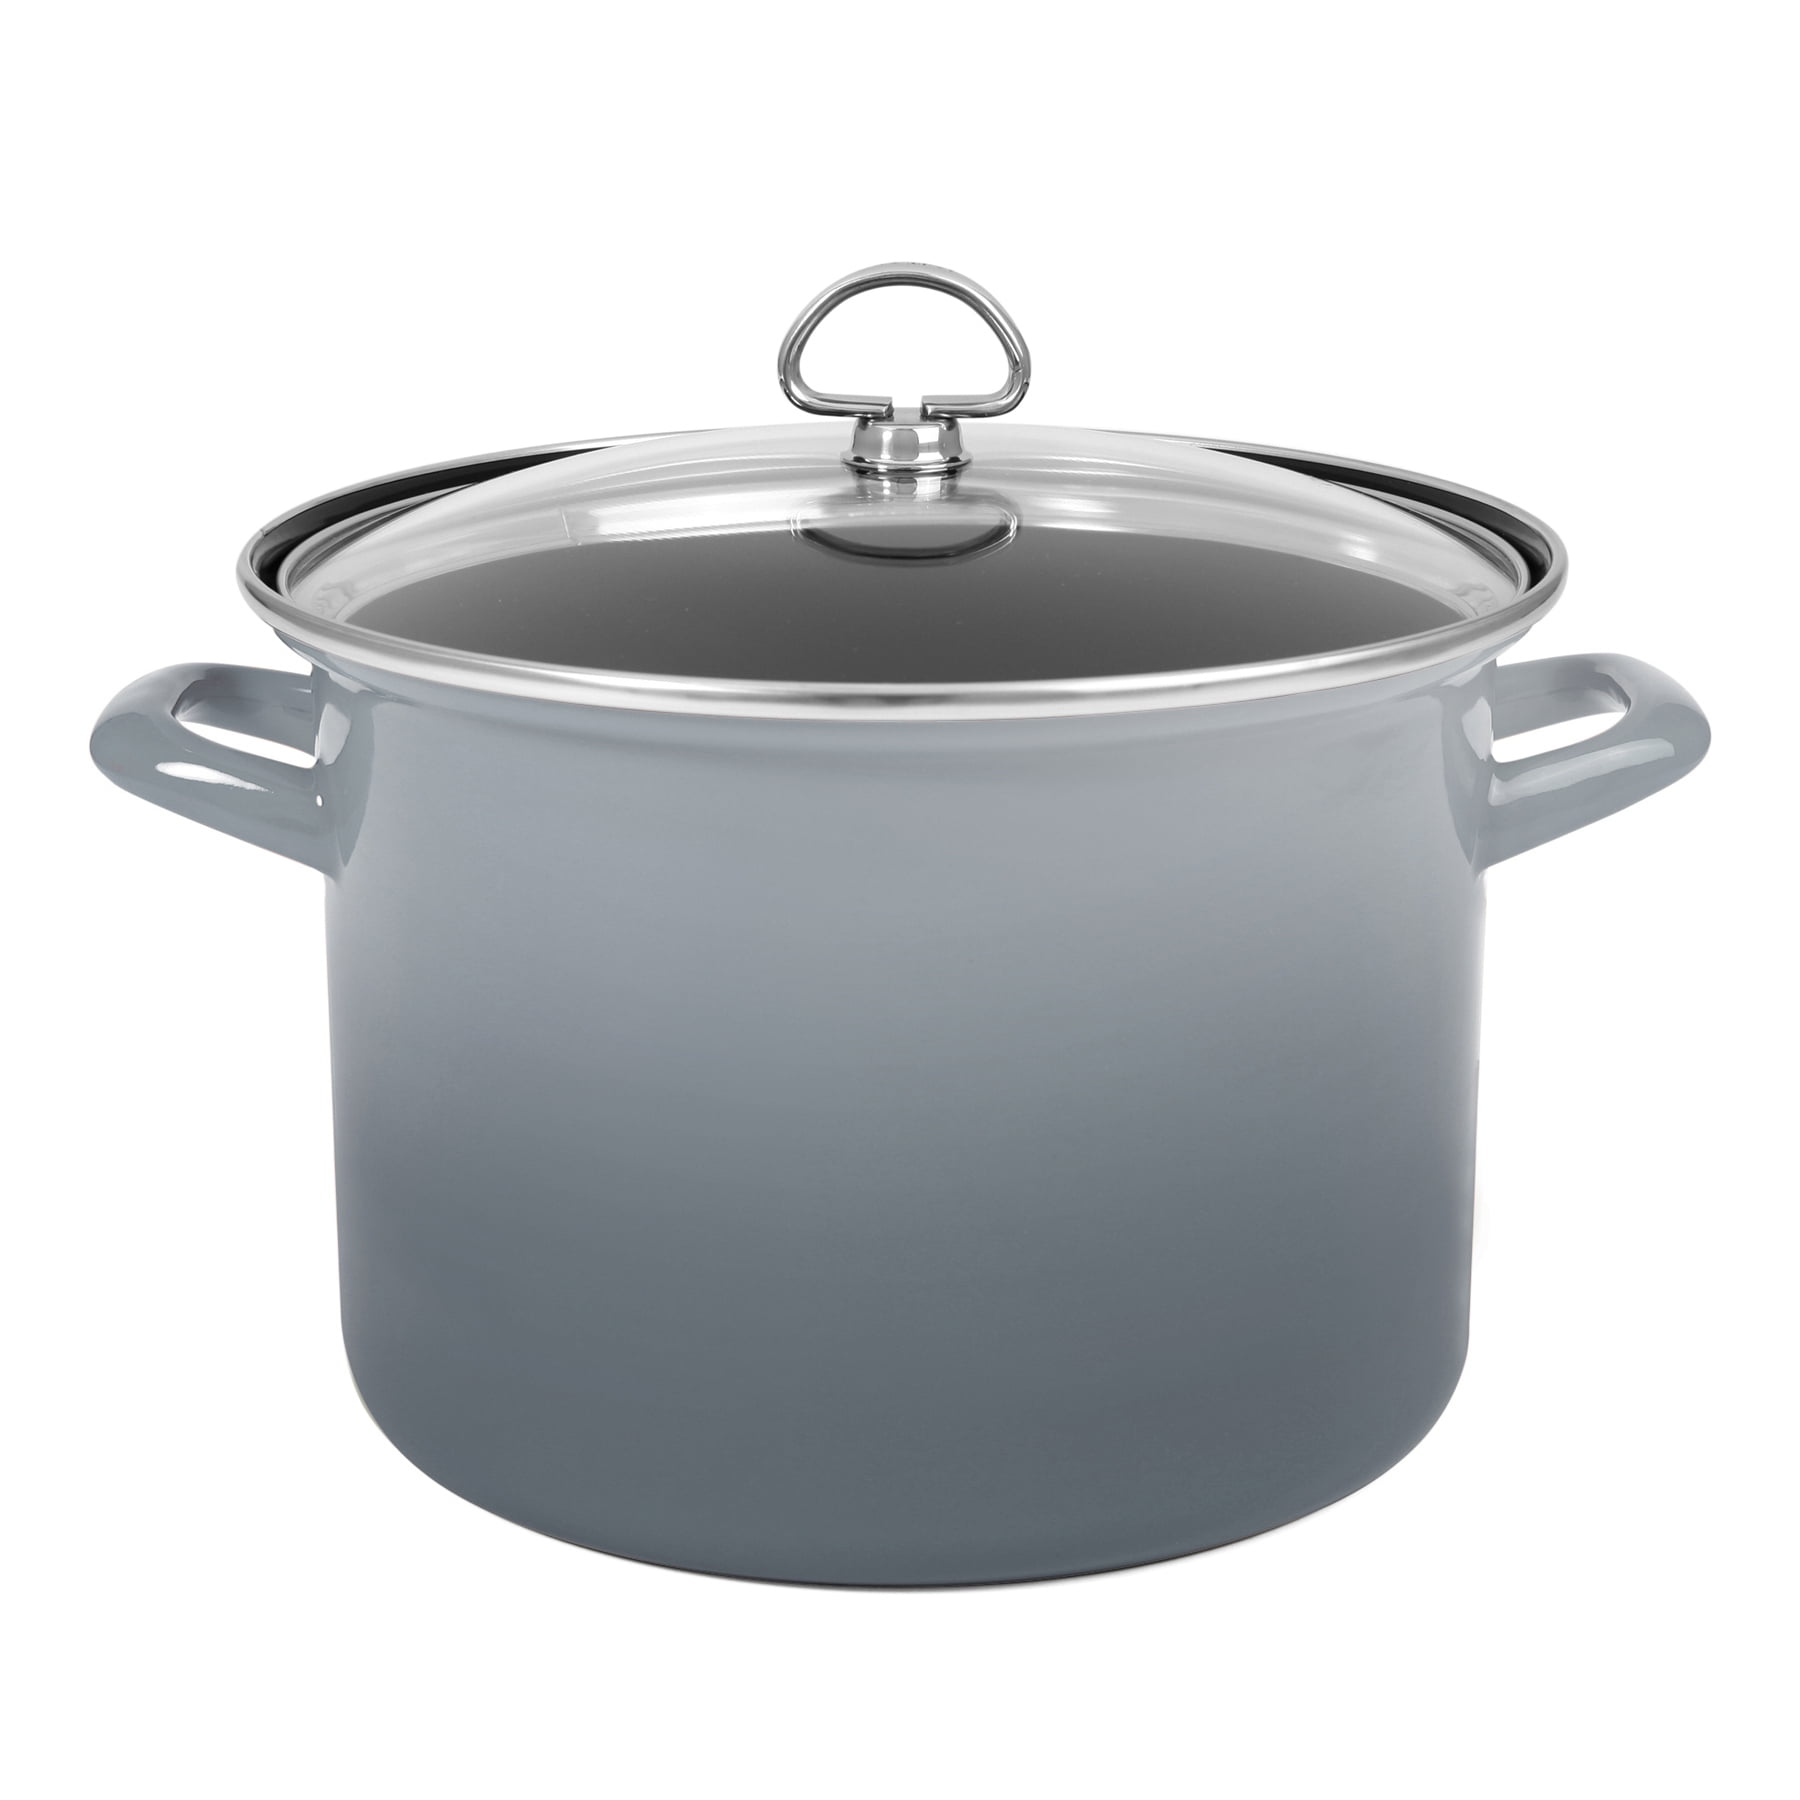 32-200S FG Chantal 4 Quart Enamel-On-Steel Soup Pot with Glass Lid - Fade  Grey